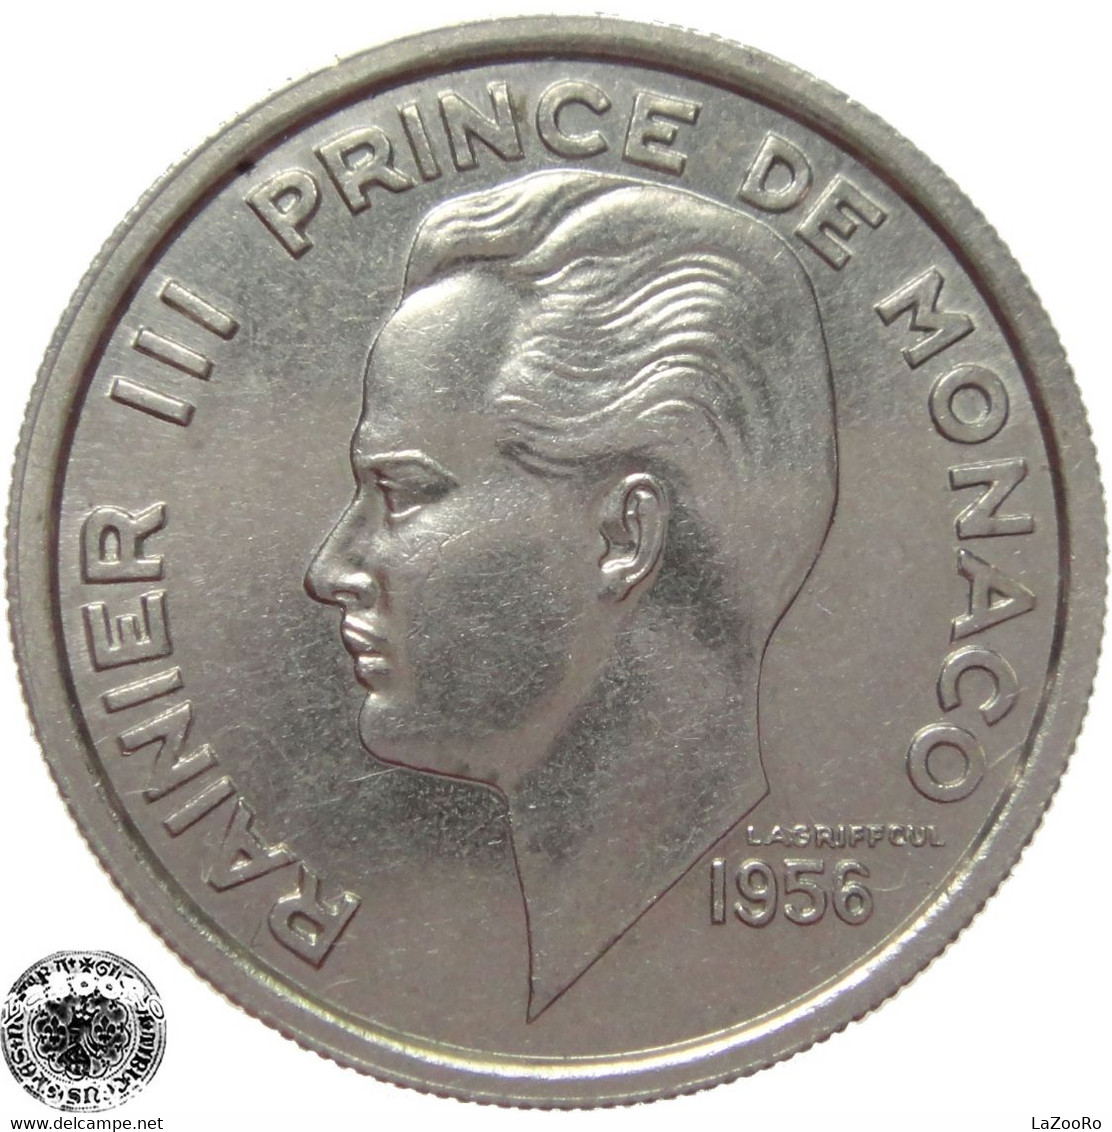 LaZooRo: Monaco 100 Francs 1956 UNC - 1949-1956 Francos Antiguos